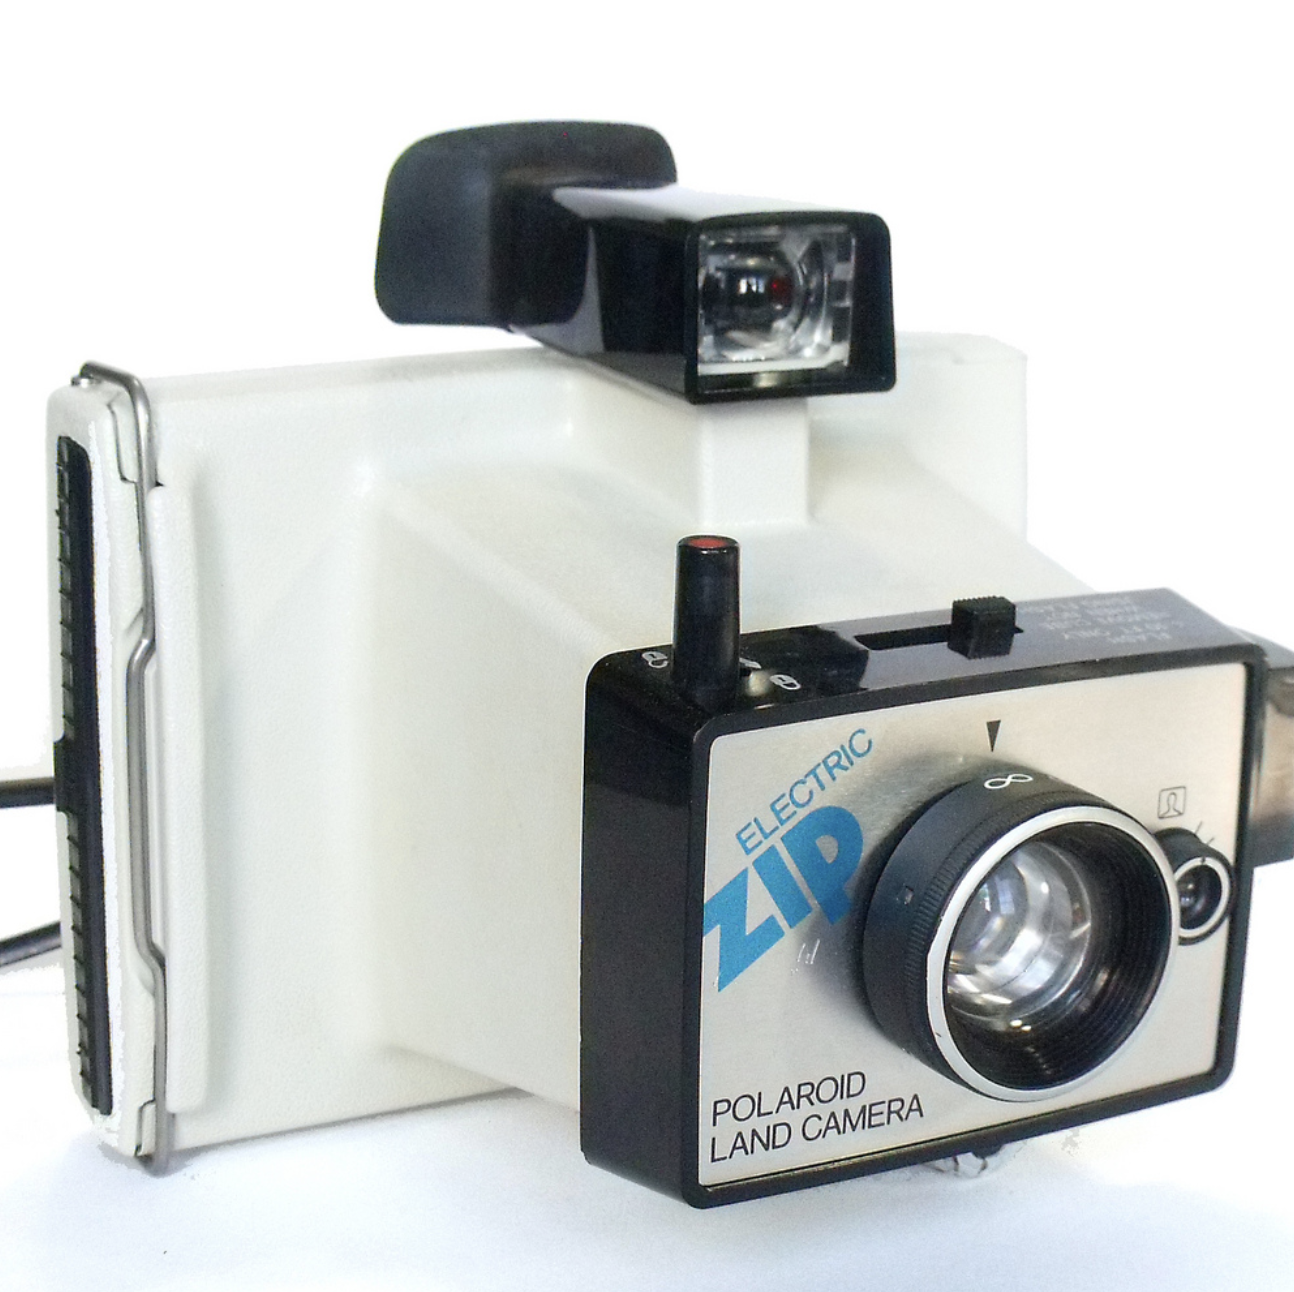 Polaroid electric zip camera